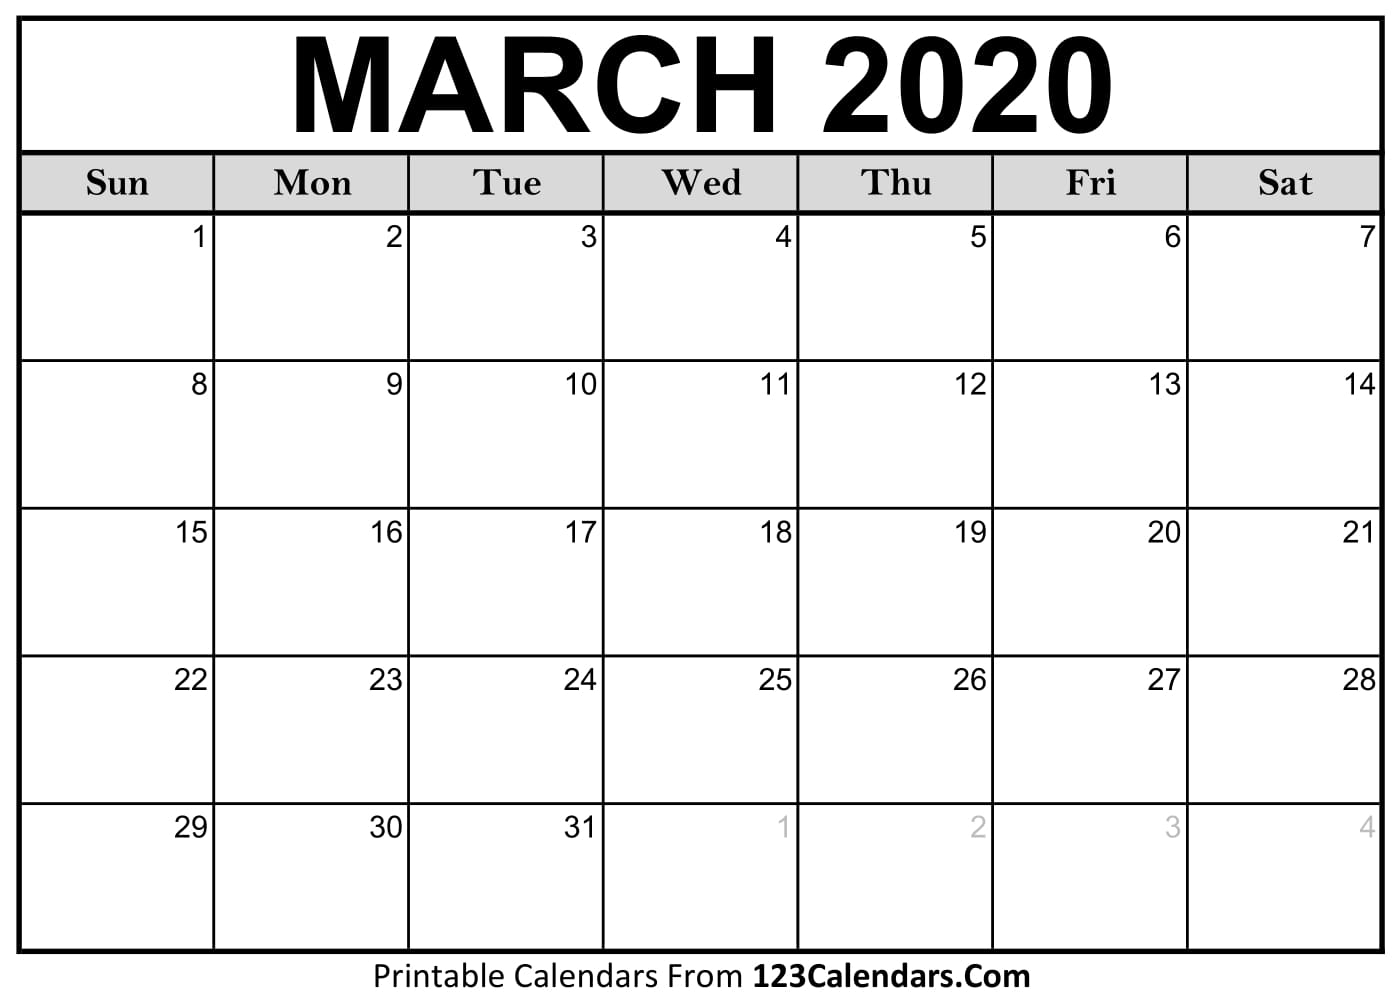 March 2020 Printable Calendar | 123Calendars